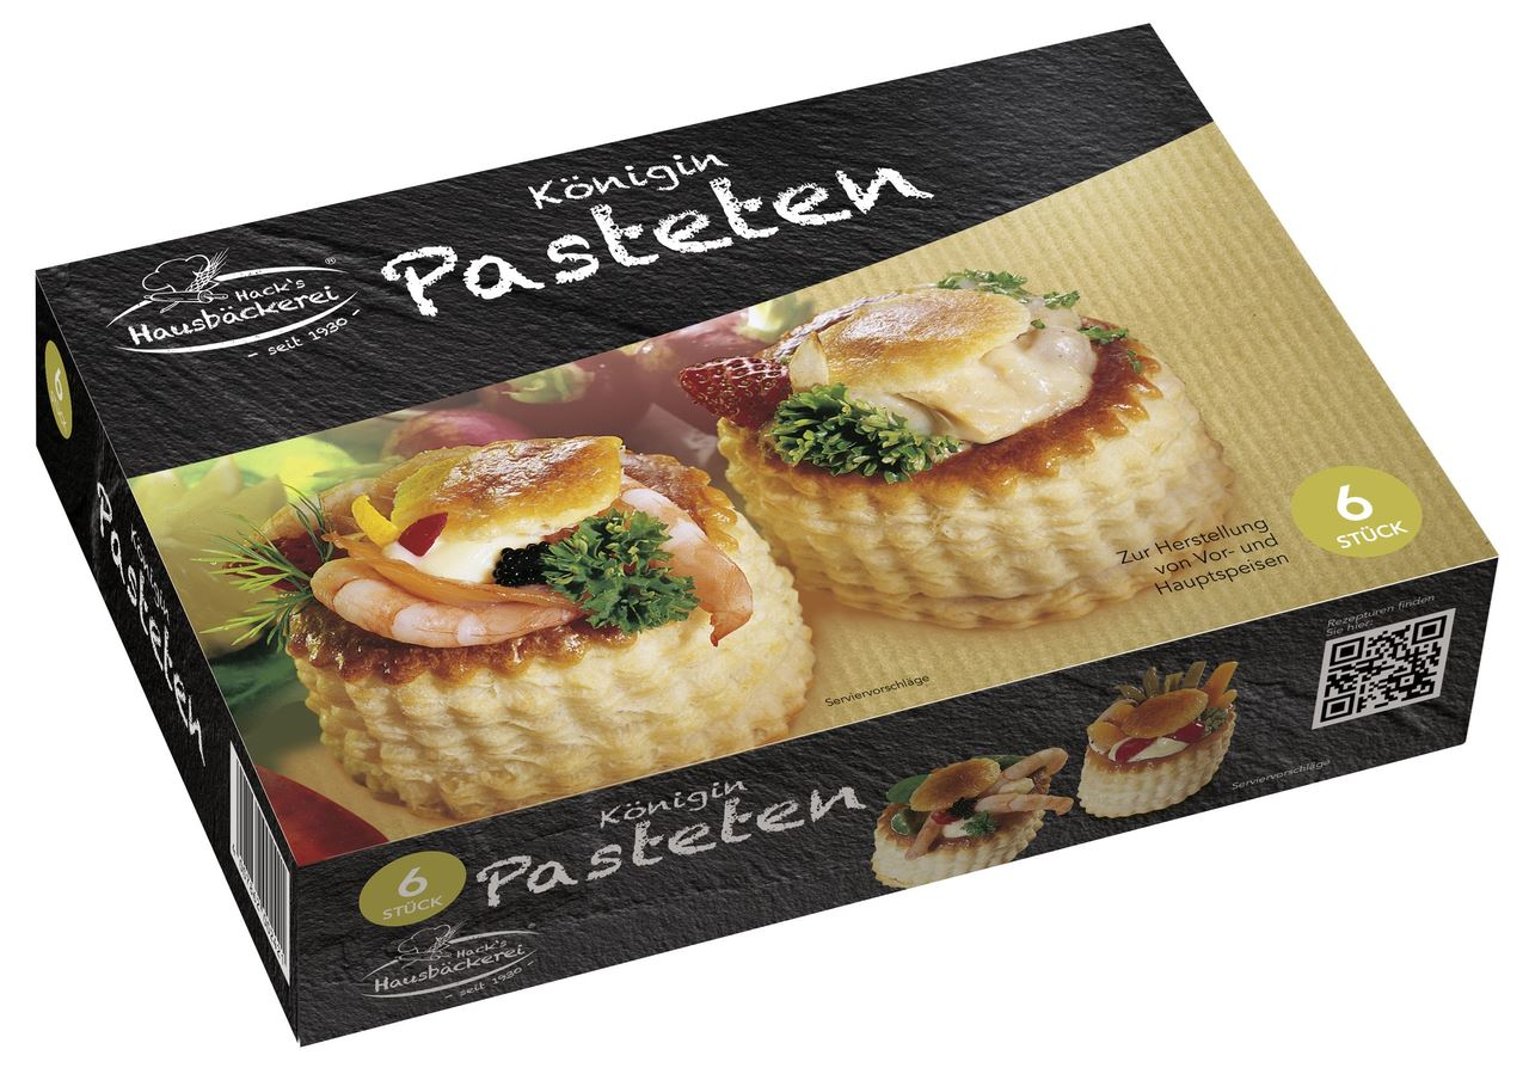 Hack's Hausbäckerei Blätterteig Pasteten Königin 6 Stück à 25 g 150 g Packung